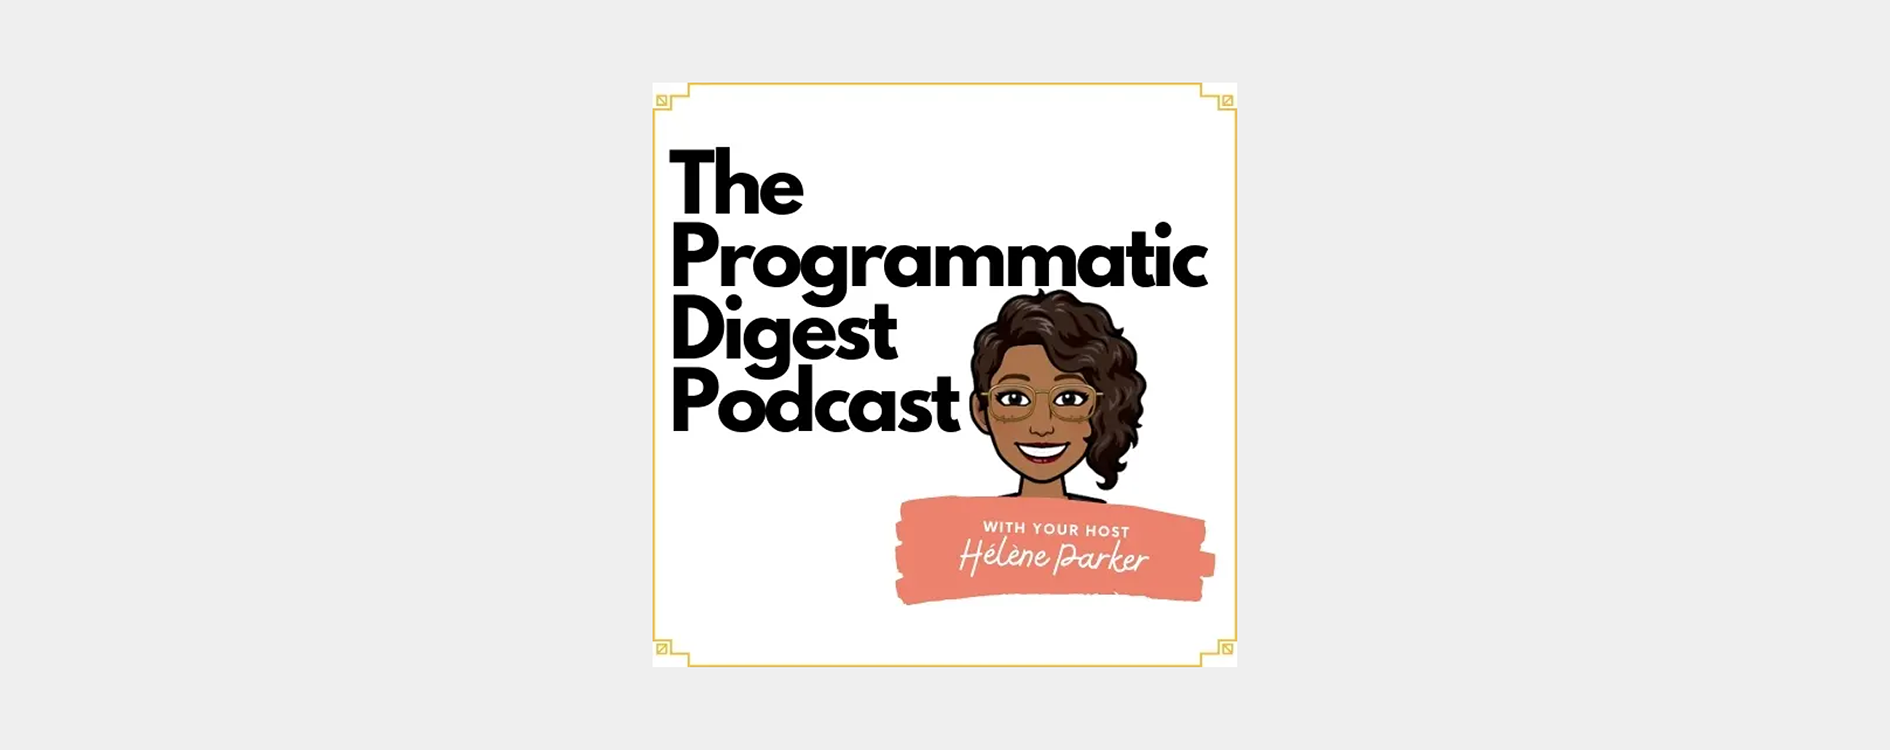 The Programmatic Digest Podcast logo